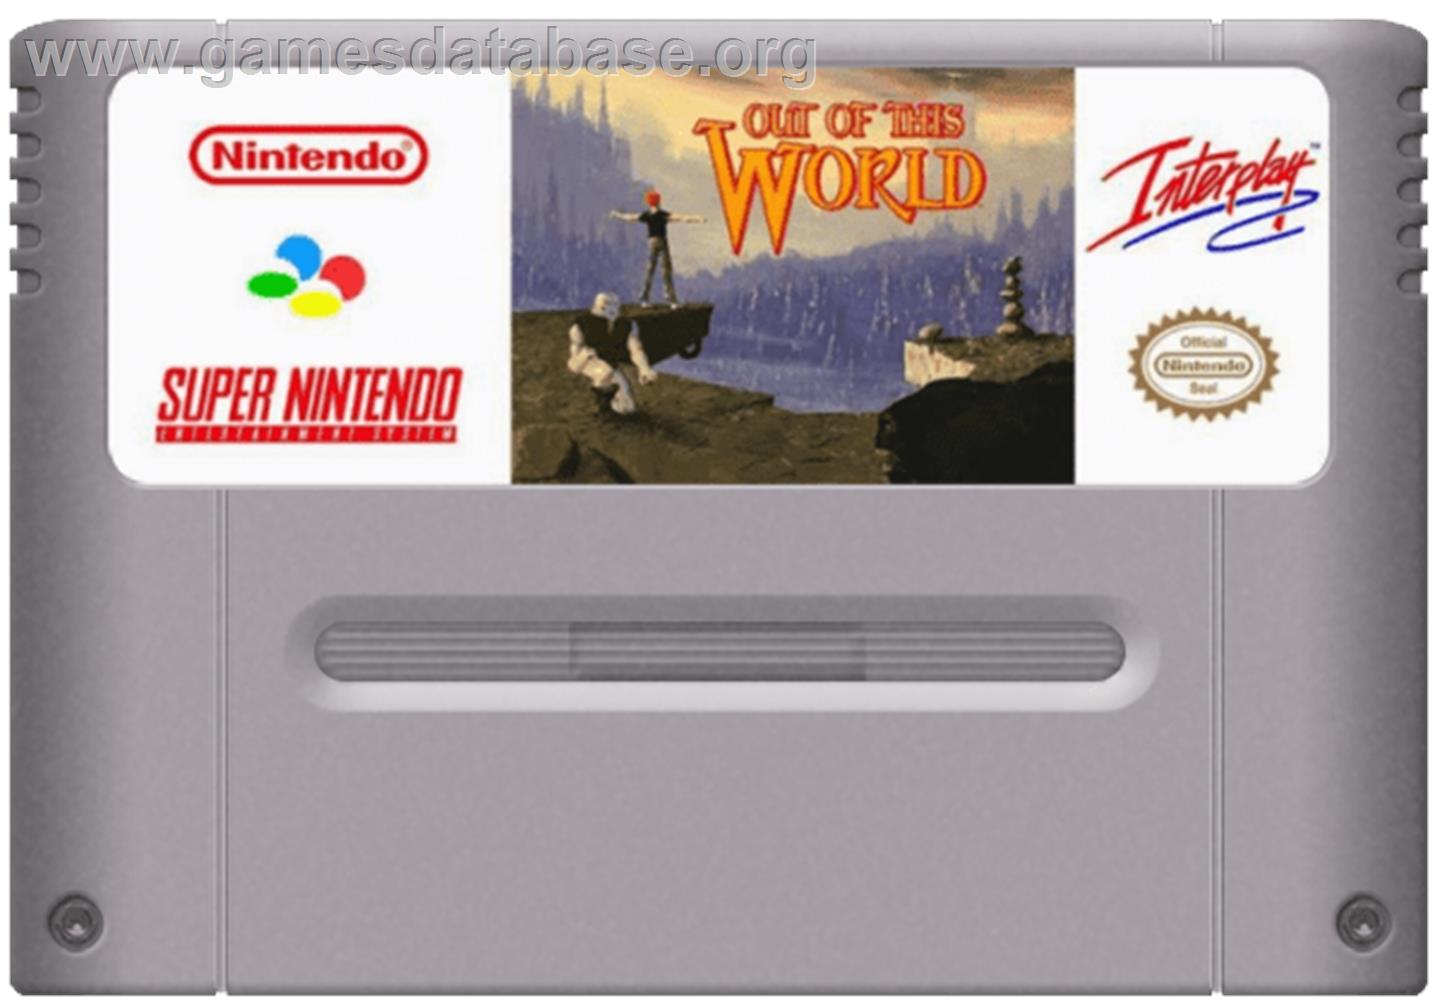 Another World - Nintendo SNES - Artwork - Cartridge